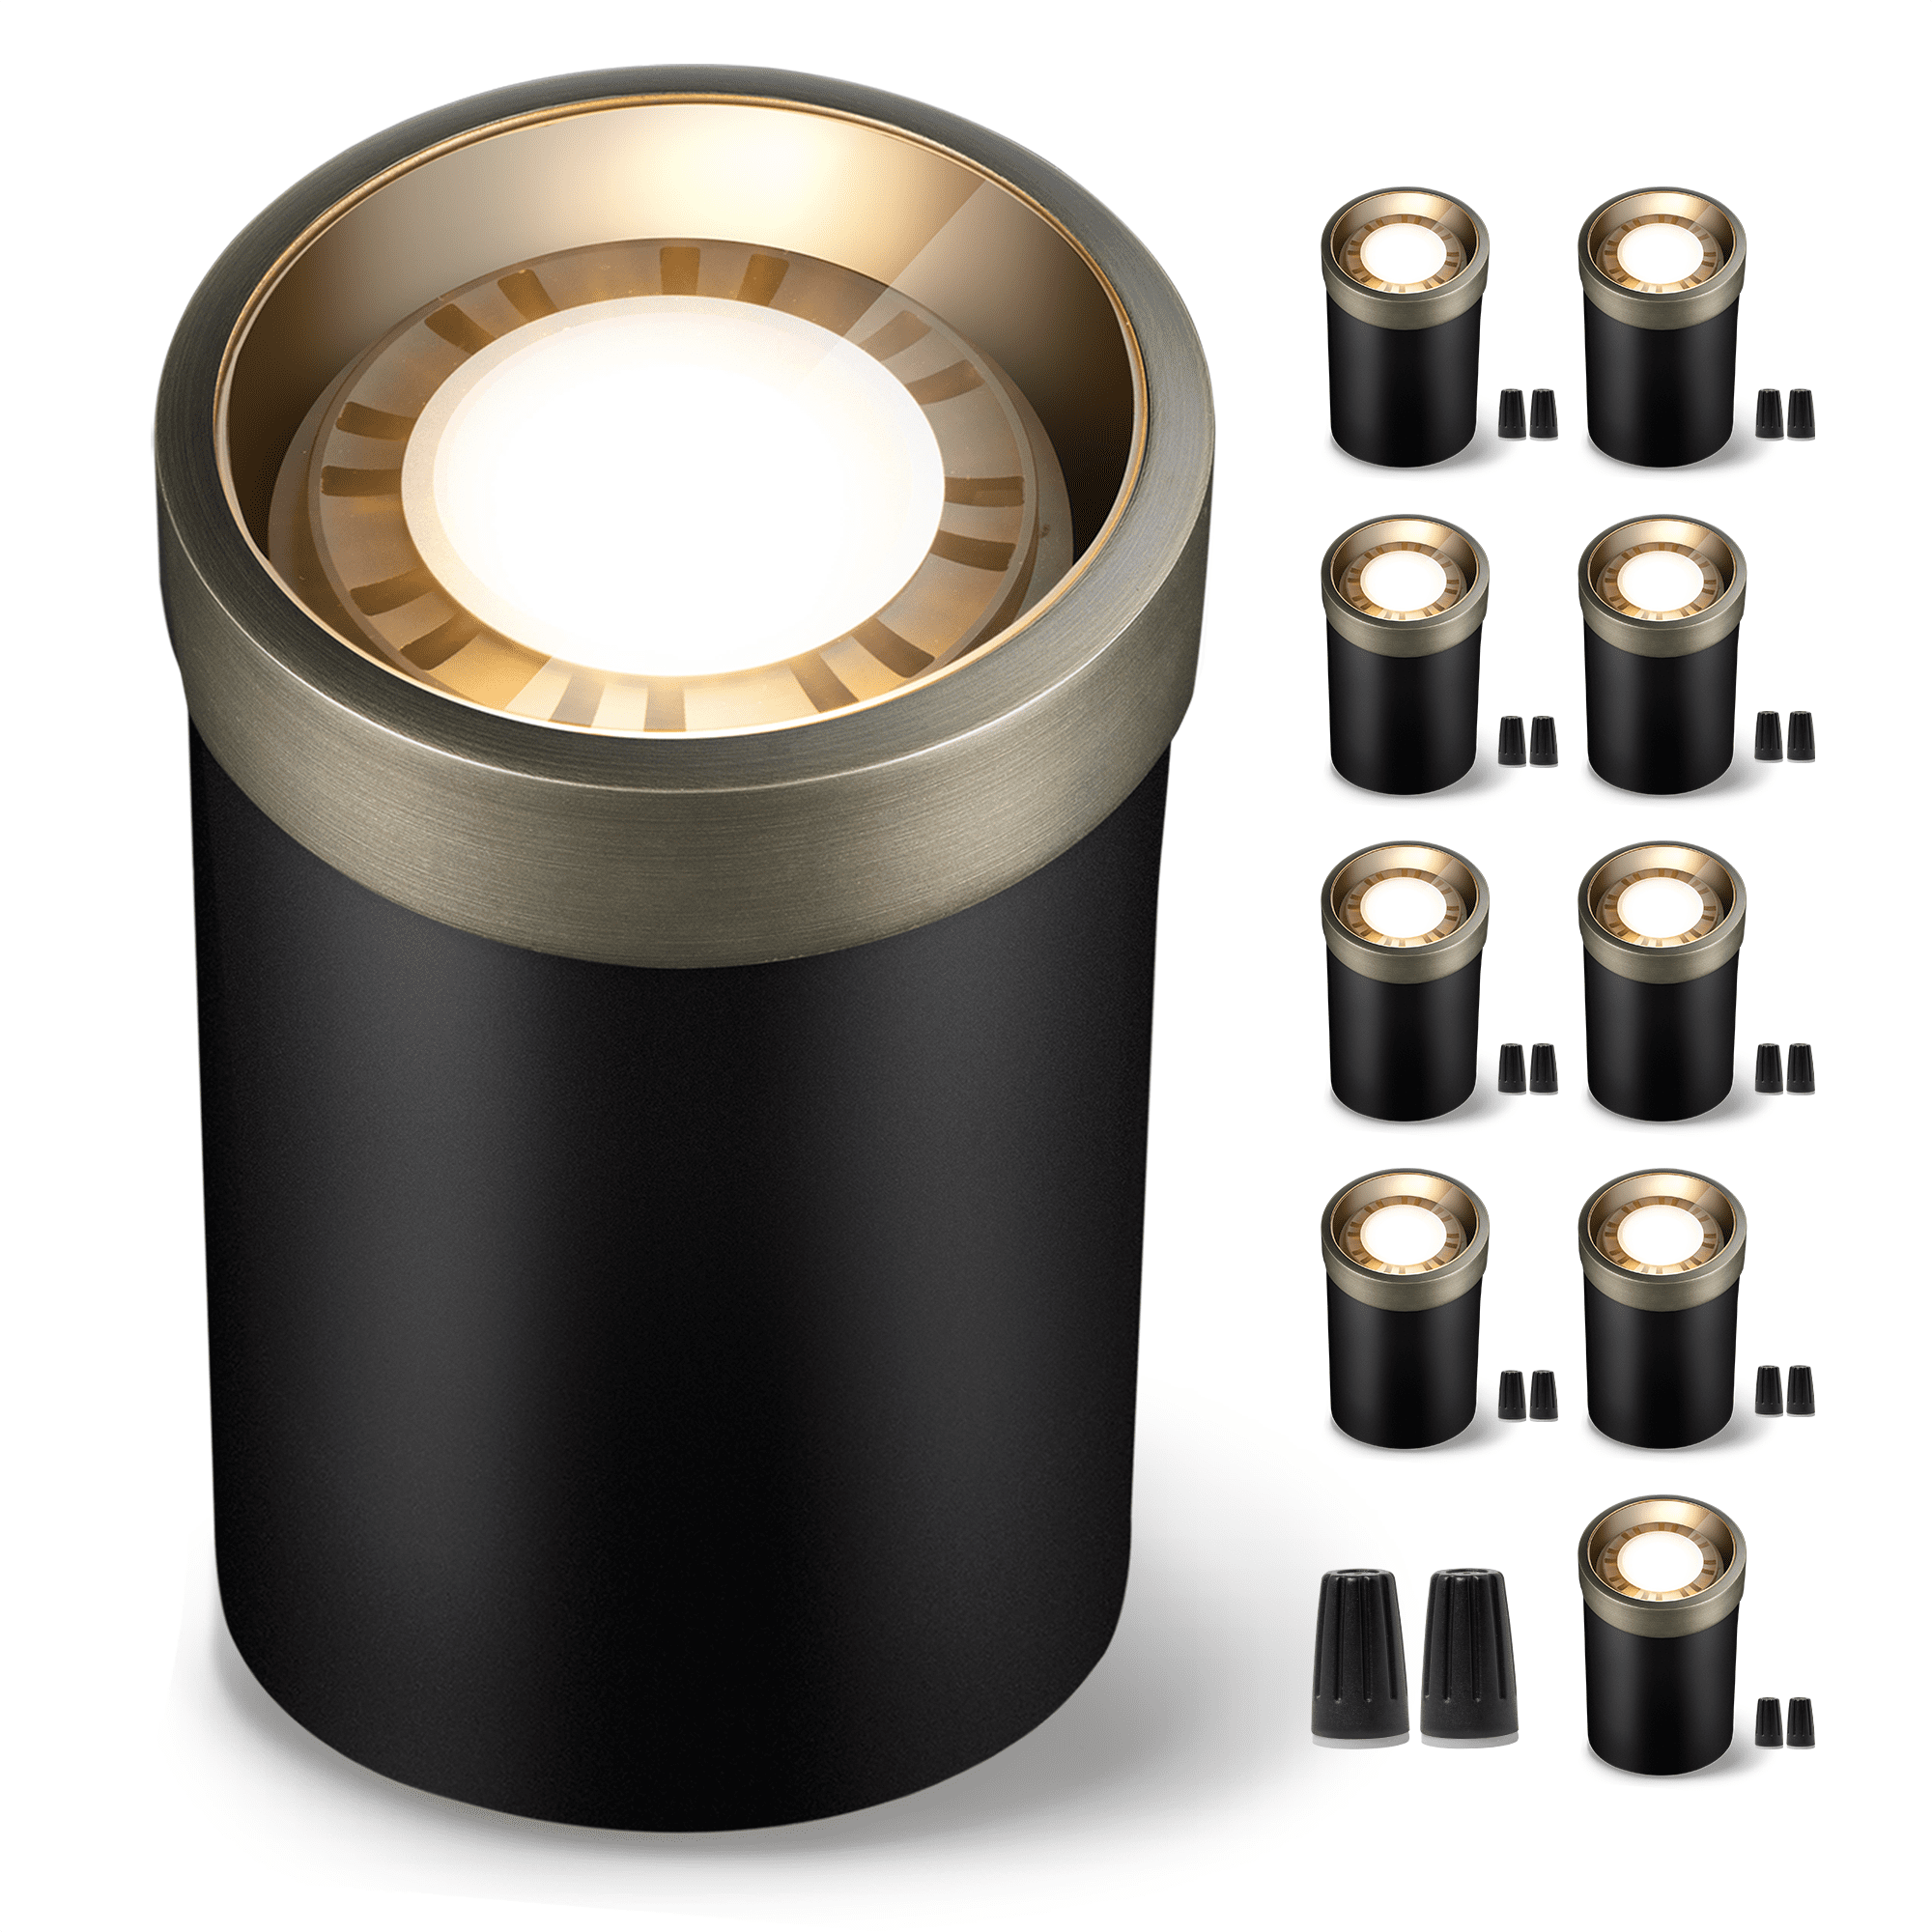 12V Low Voltage Brass In Ground Well Light Shielded Top - Gardenreet –  Gardenreet Lighting